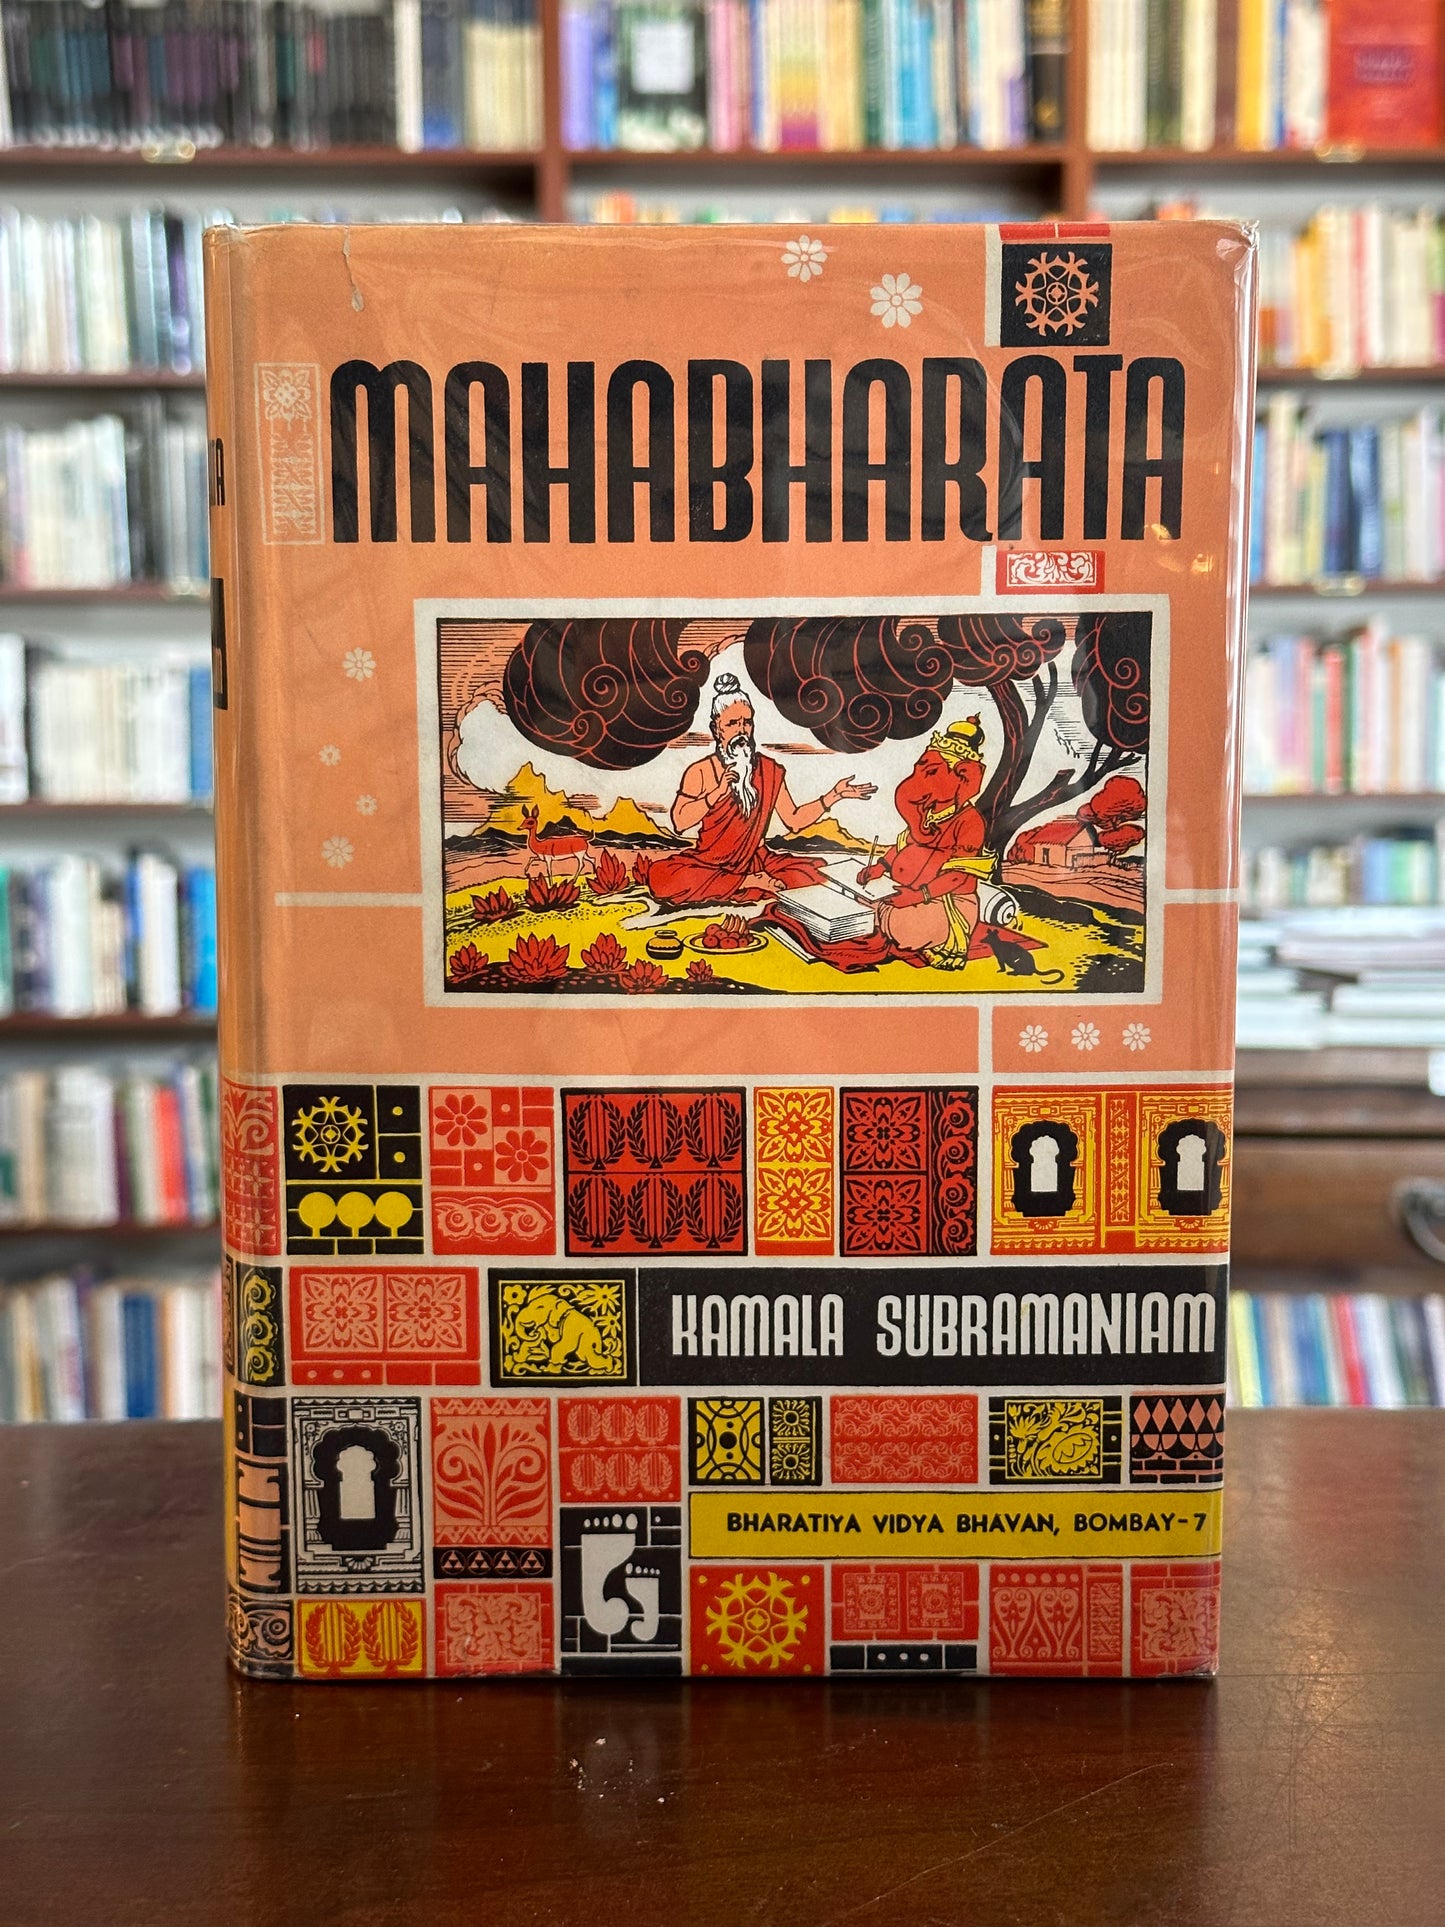 Mahabharata by Kamala Subramaniam